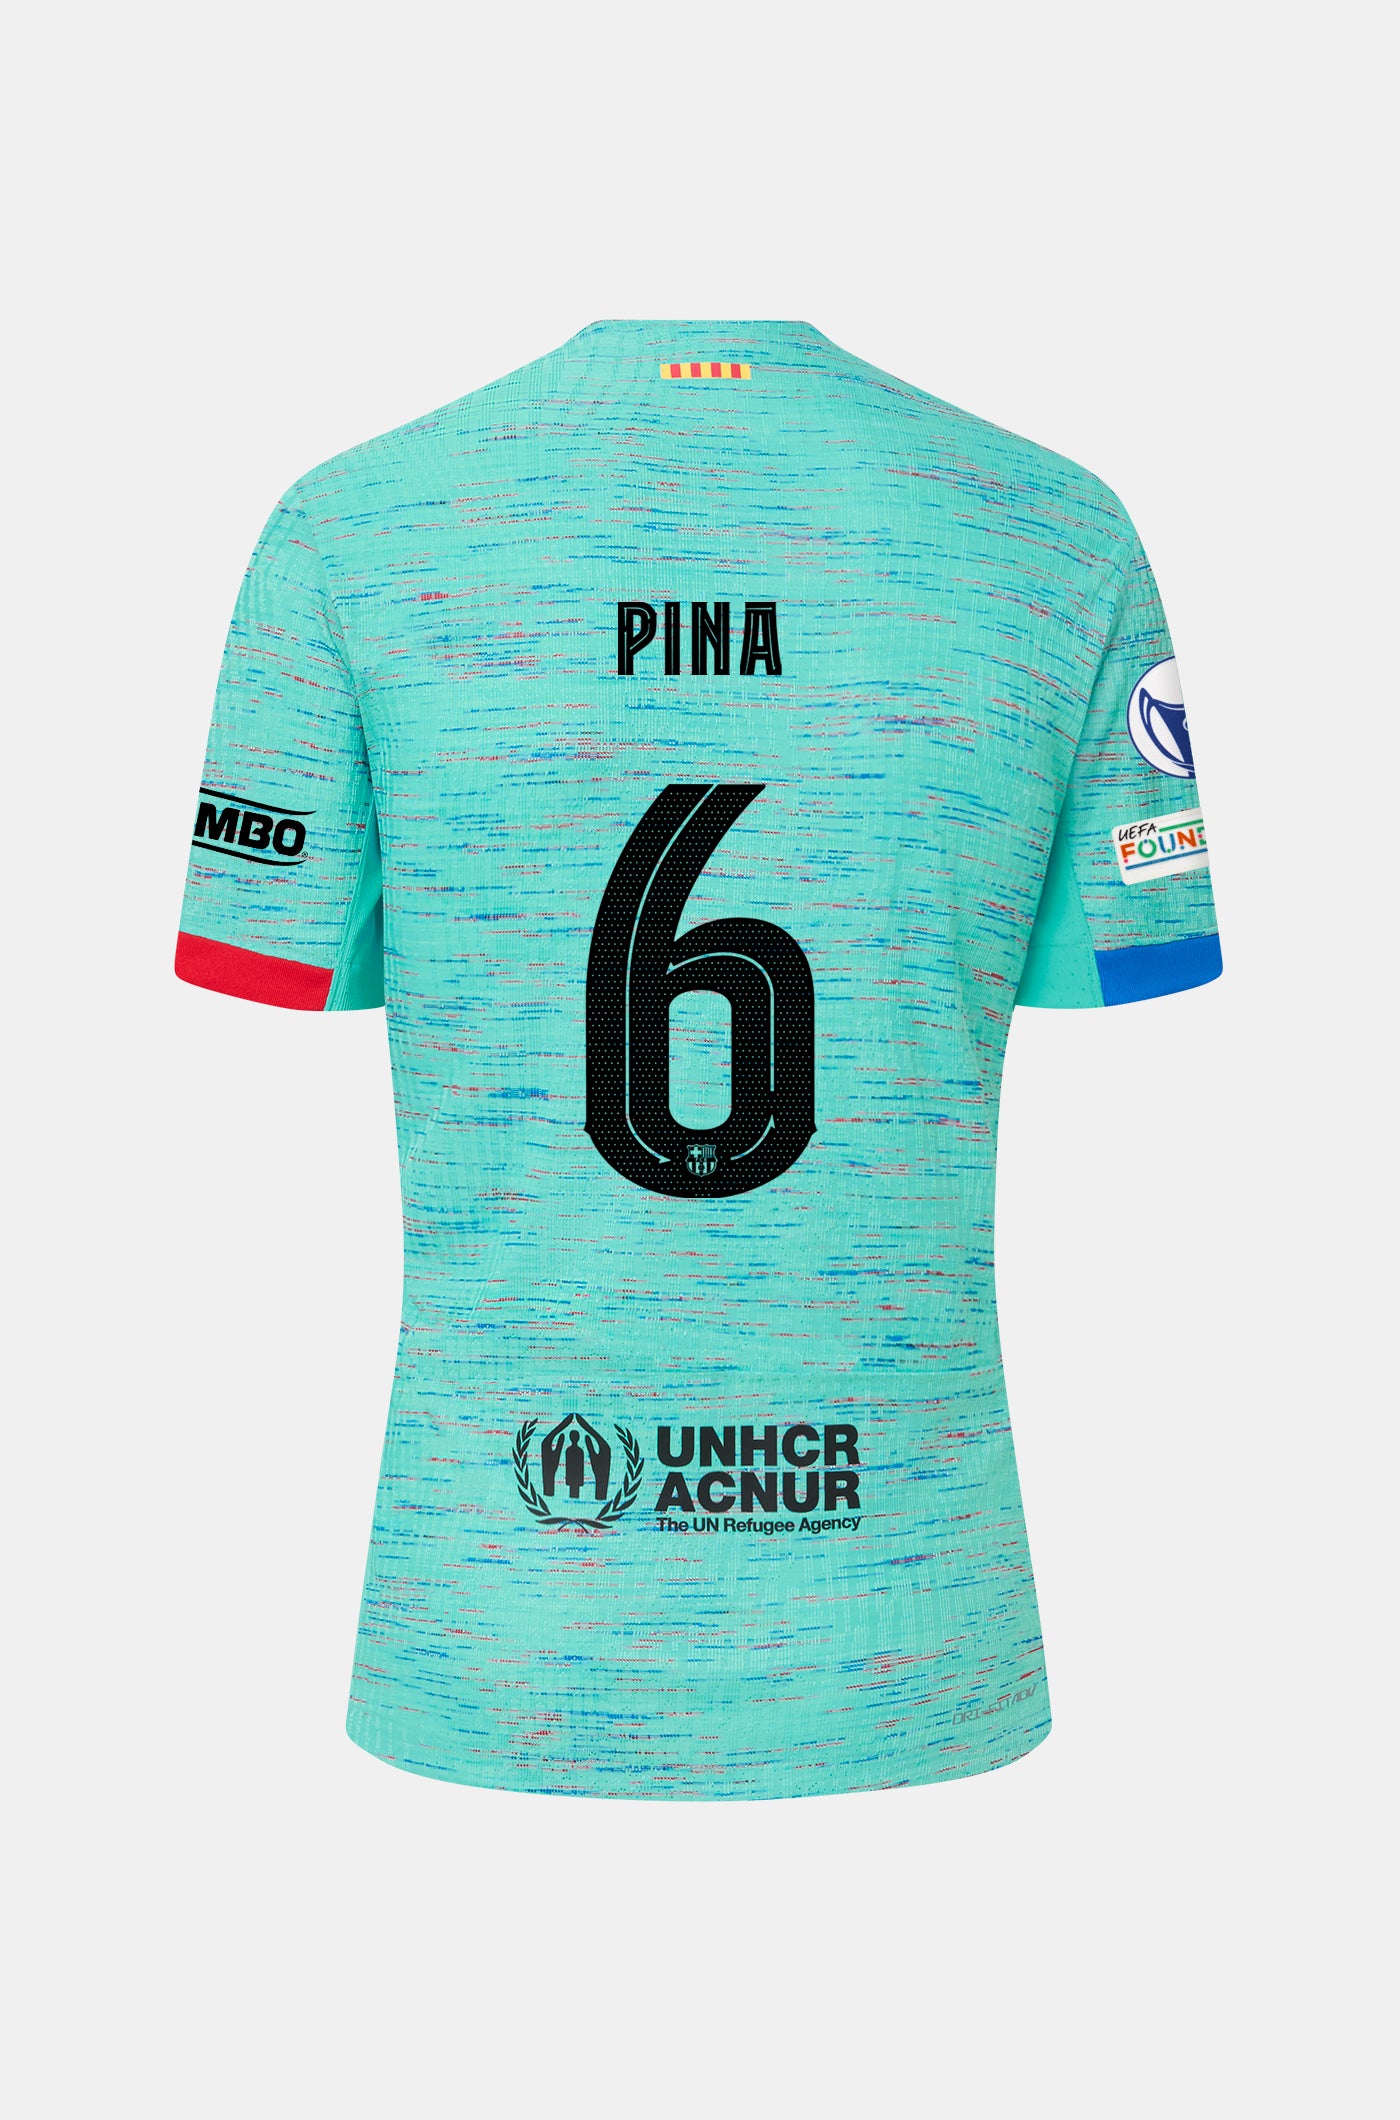 UWCL FC Barcelona third shirt 23/24 – Men - PINA